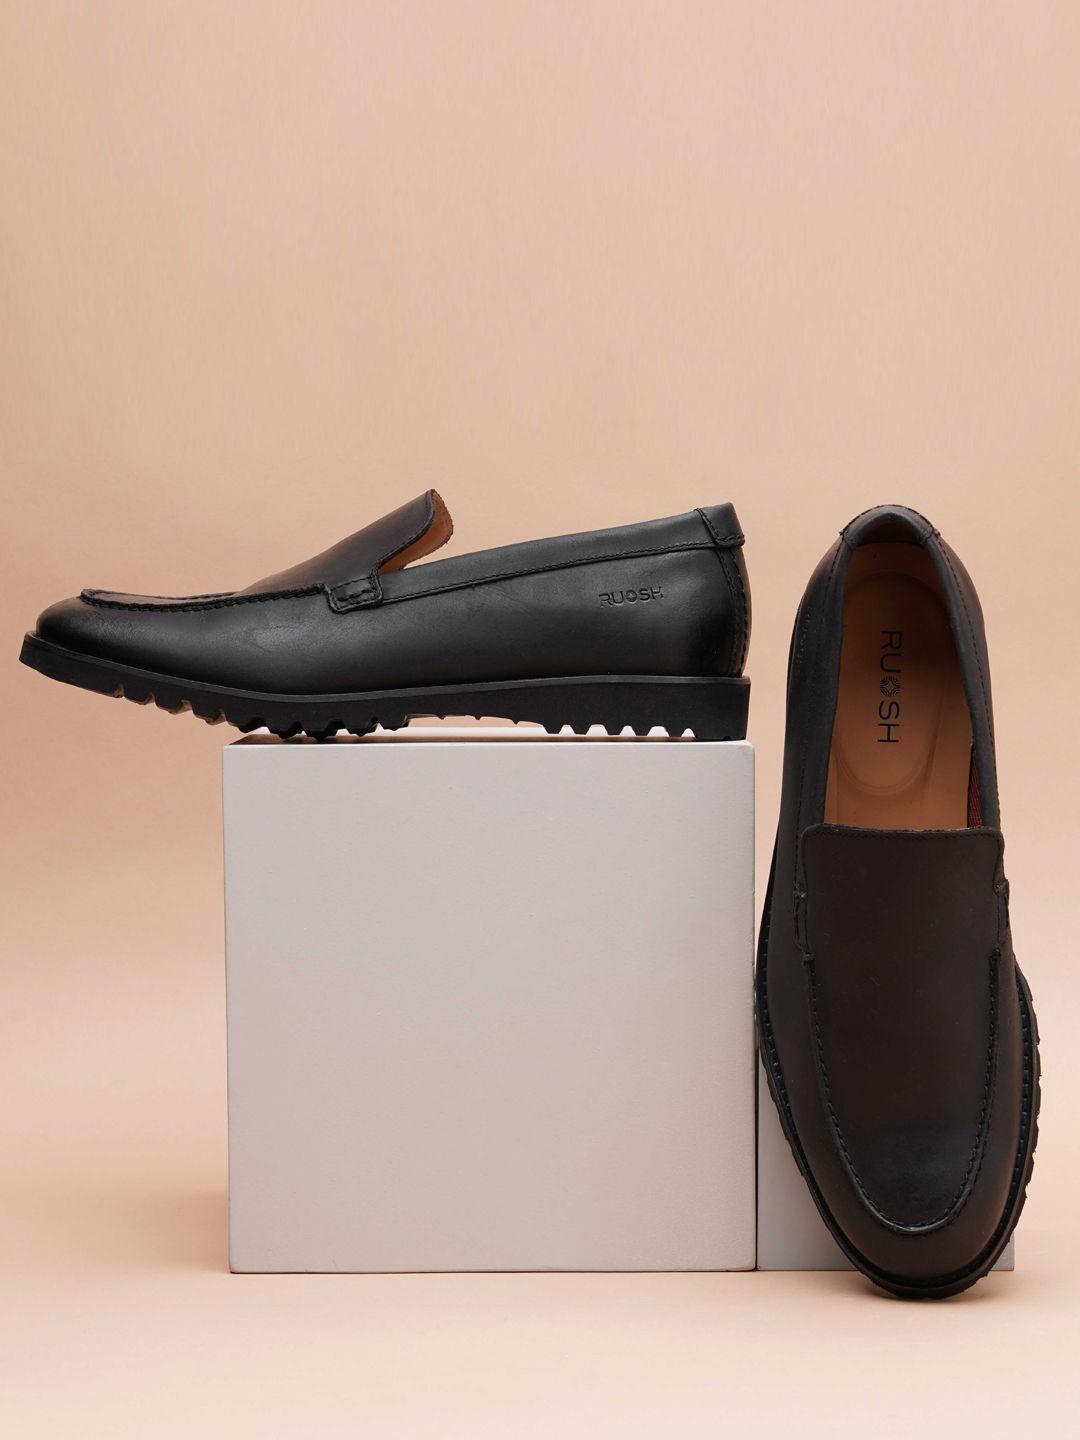 ruosh-men-lightweight-comfort-insole-leather-basics-loafers